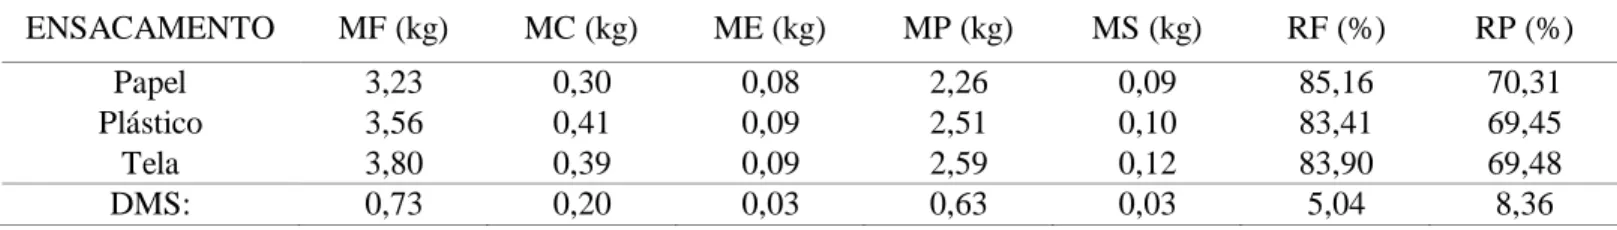 Tabela 3.2 - Características físicas dos frutos de graviola: massa do fruto (MF), massa da casca (MC), massa do engaço  (ME),  massa  da  polpa  (MP),  massa  de  sementes  (MS),  rendimento  de  fruto  (RF)  e  rendimento  de  polpa  (RP)